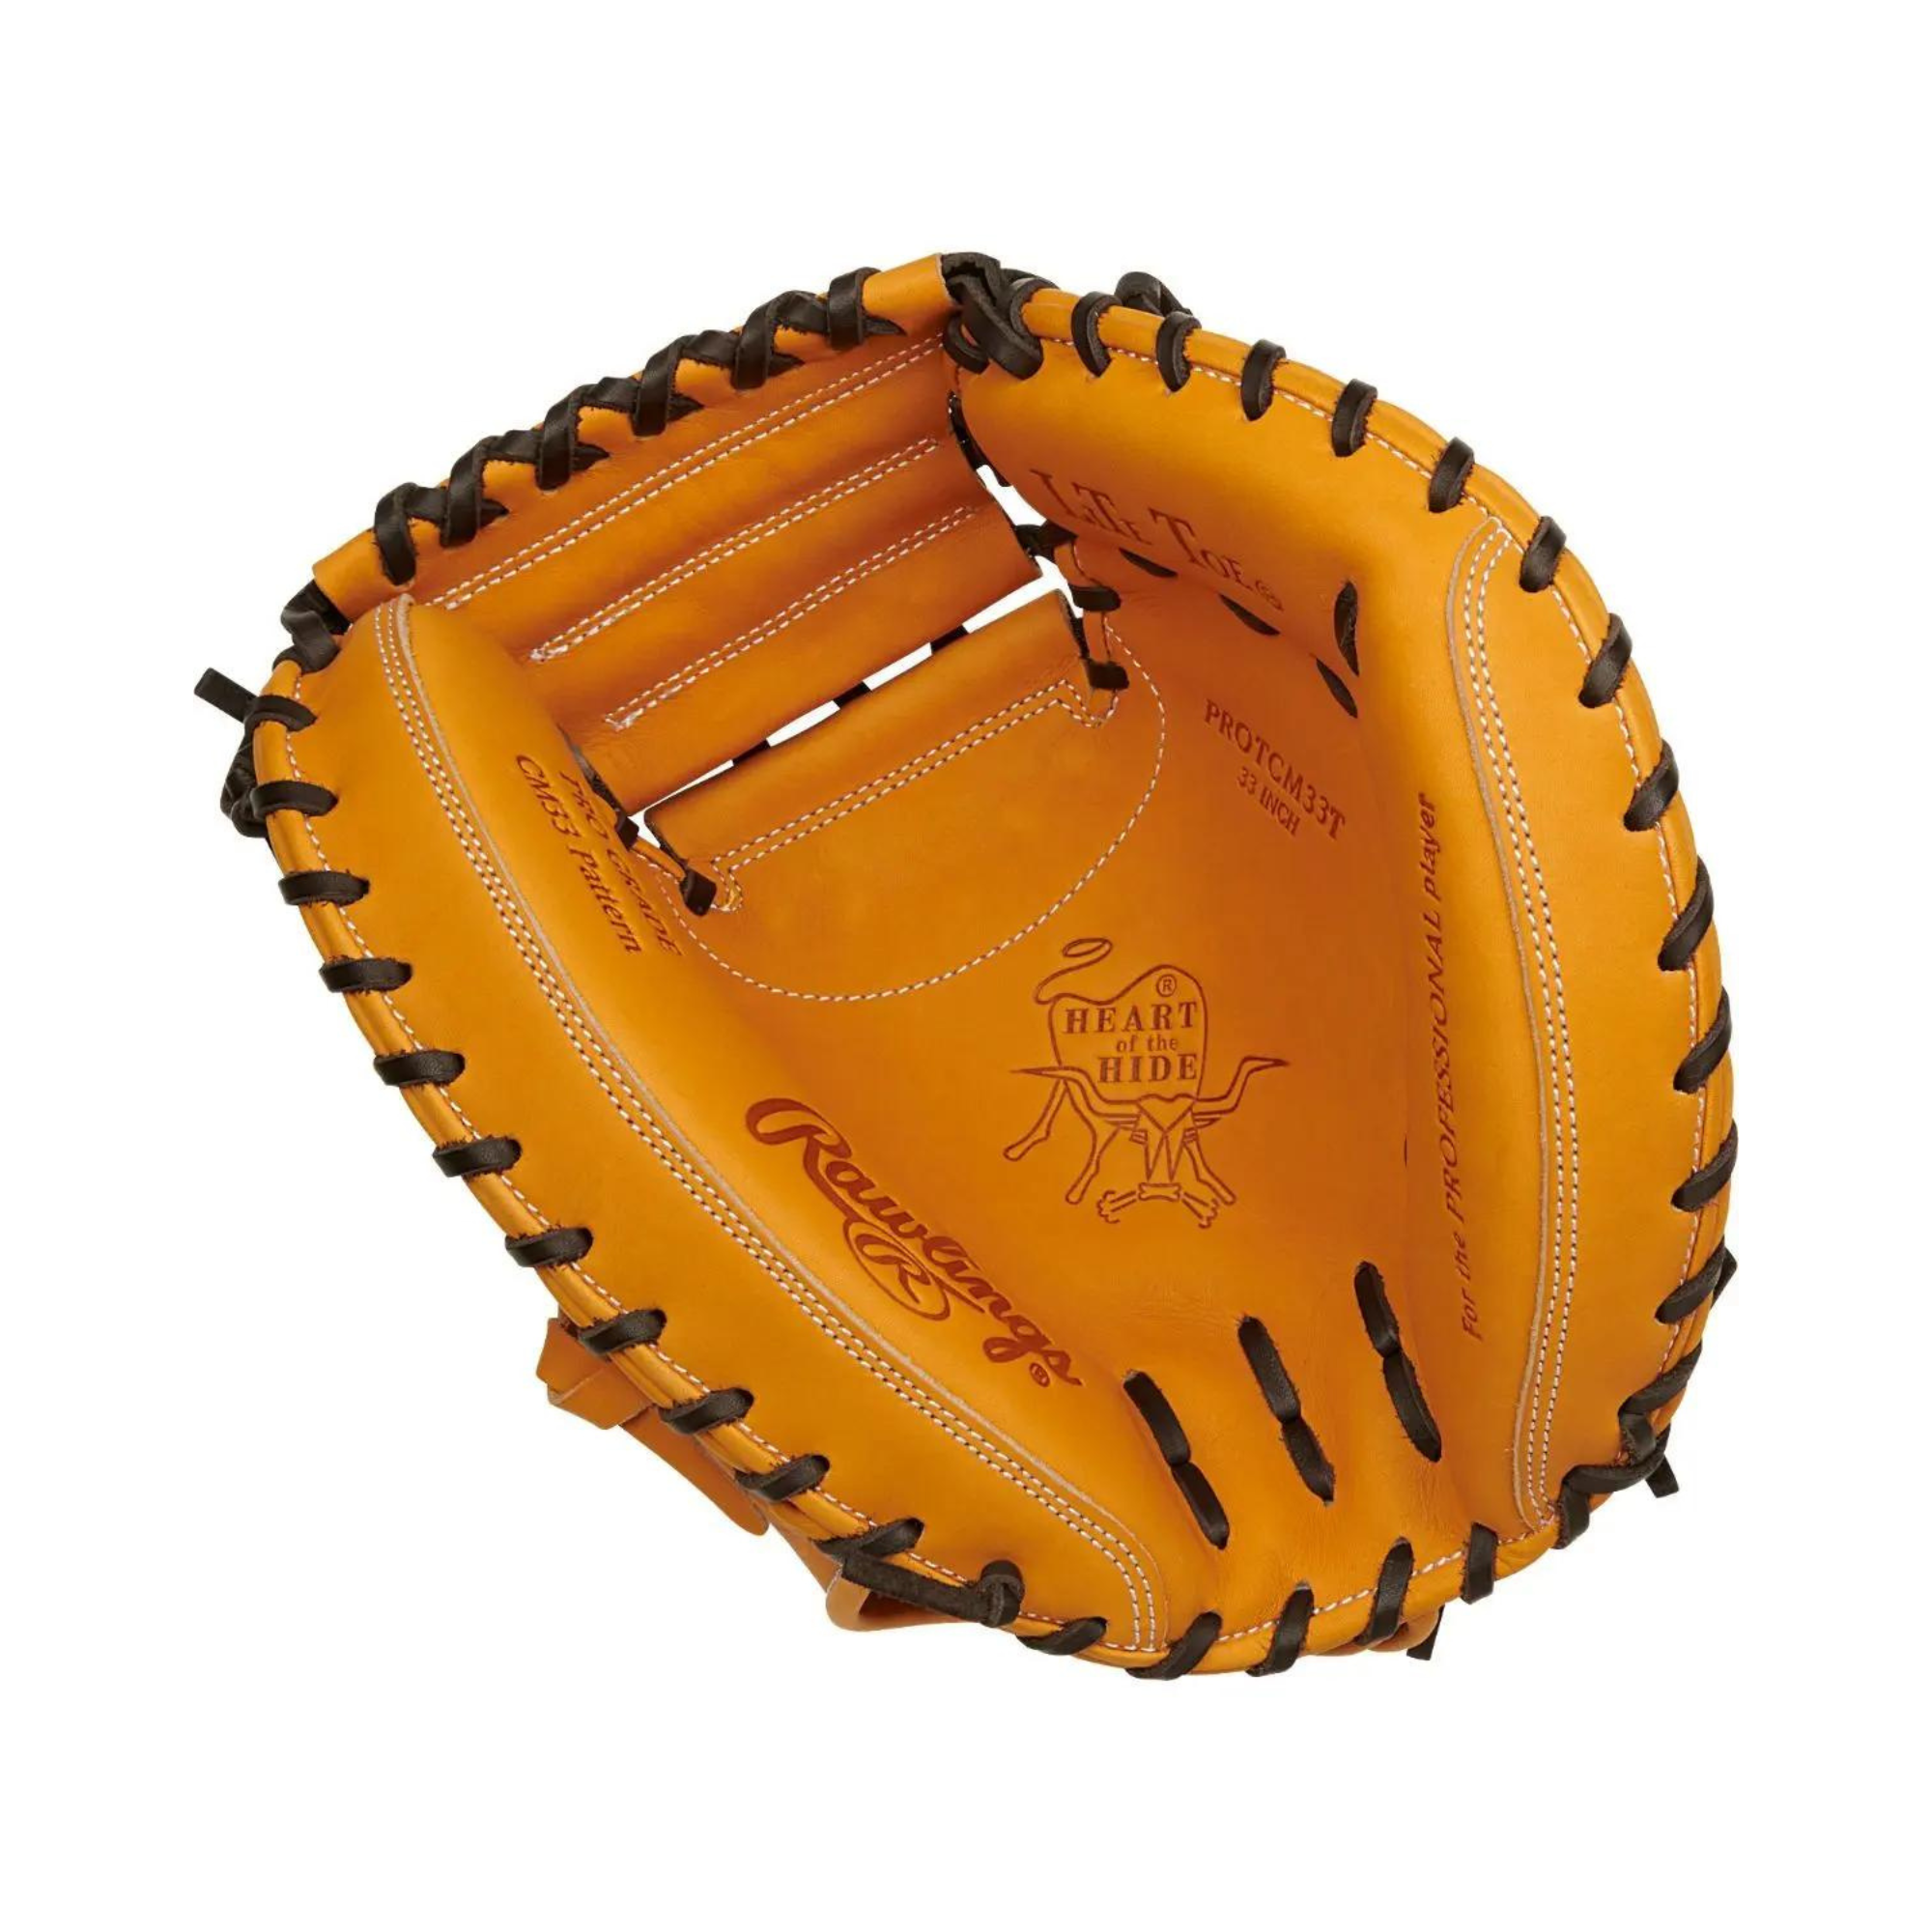 Rawlings Heart Of The Hide Traditional Series Catchers Mitt Baseball Glove 33" RHT